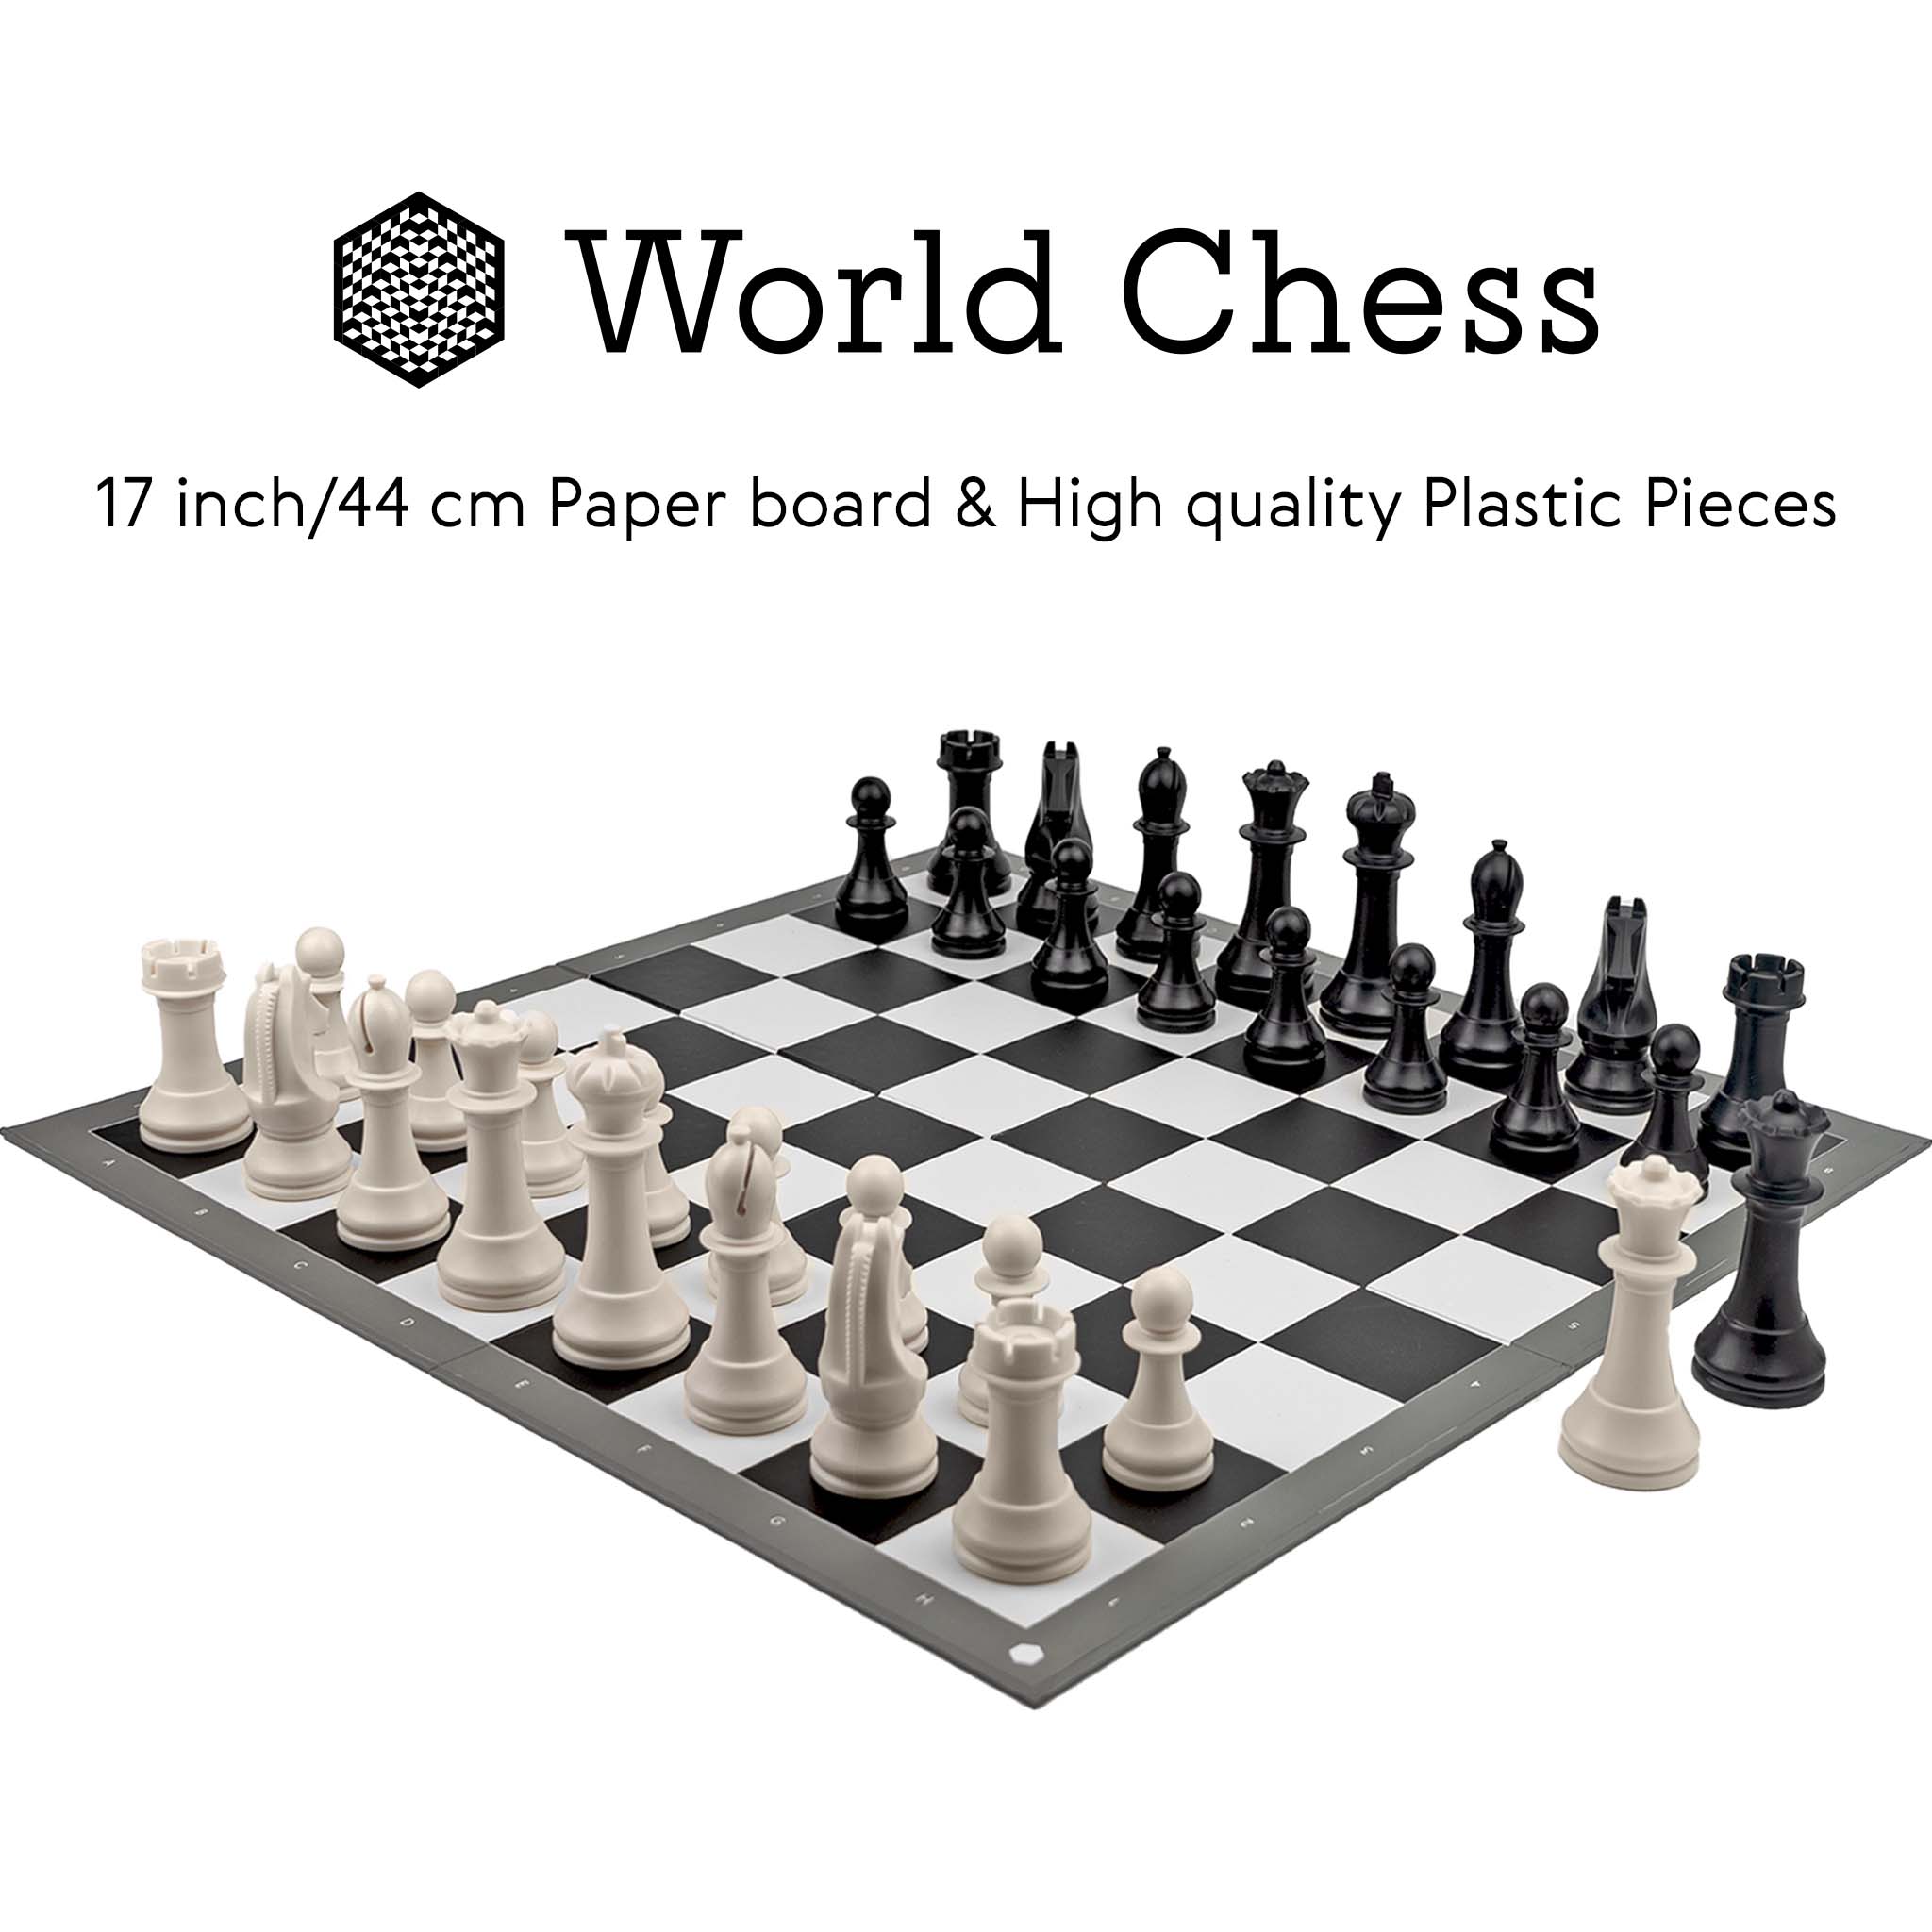 World Chess Championship 2021 - Remote Chess Academy